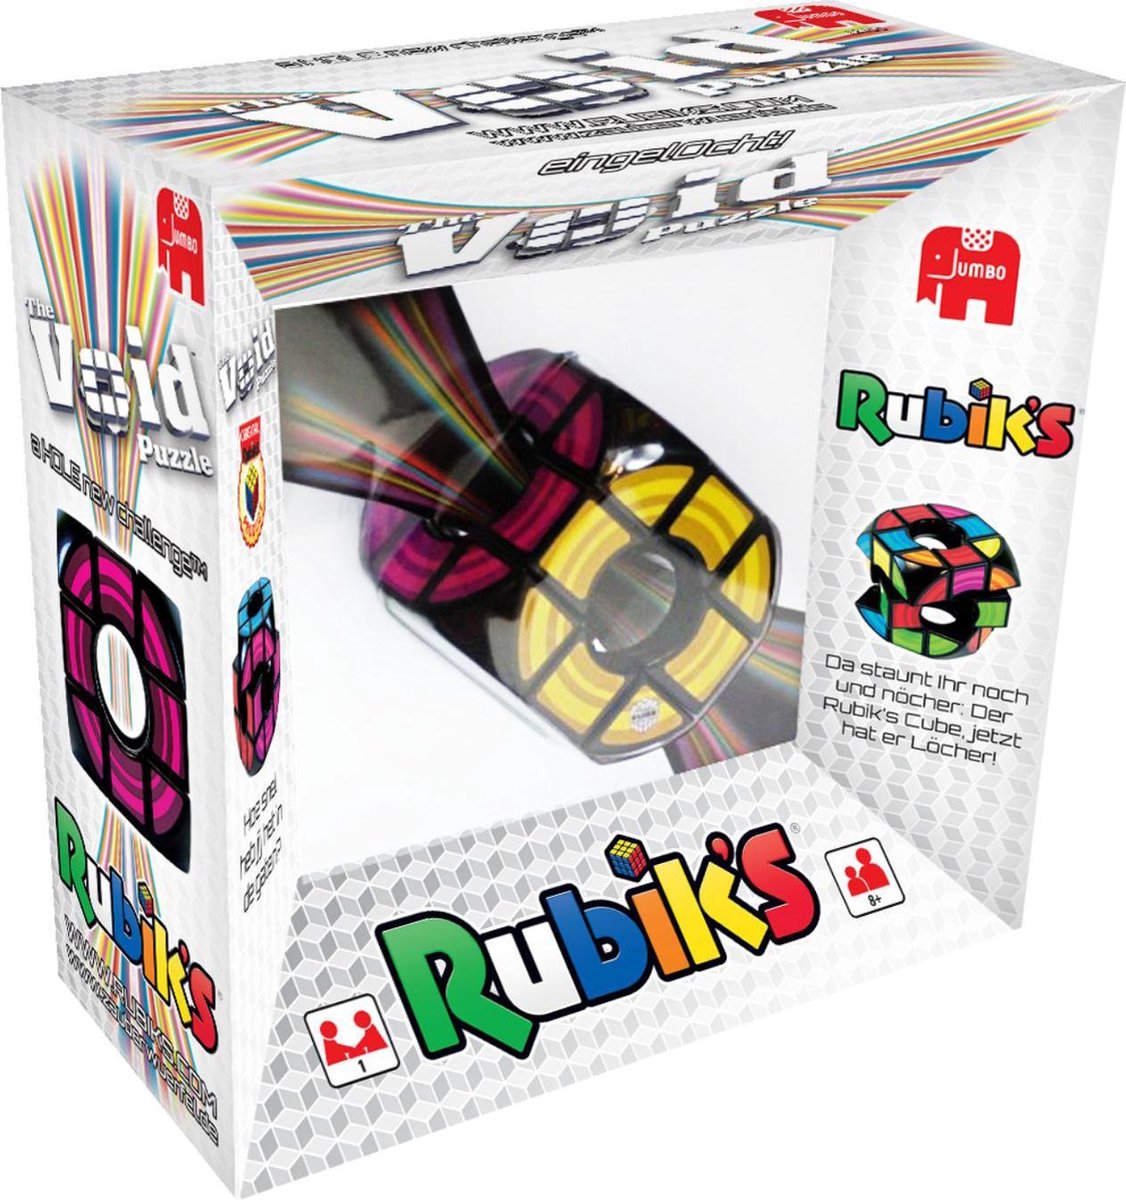 Rubik's Perplexus Hybride 2 x 2, Casse-tête stimulant